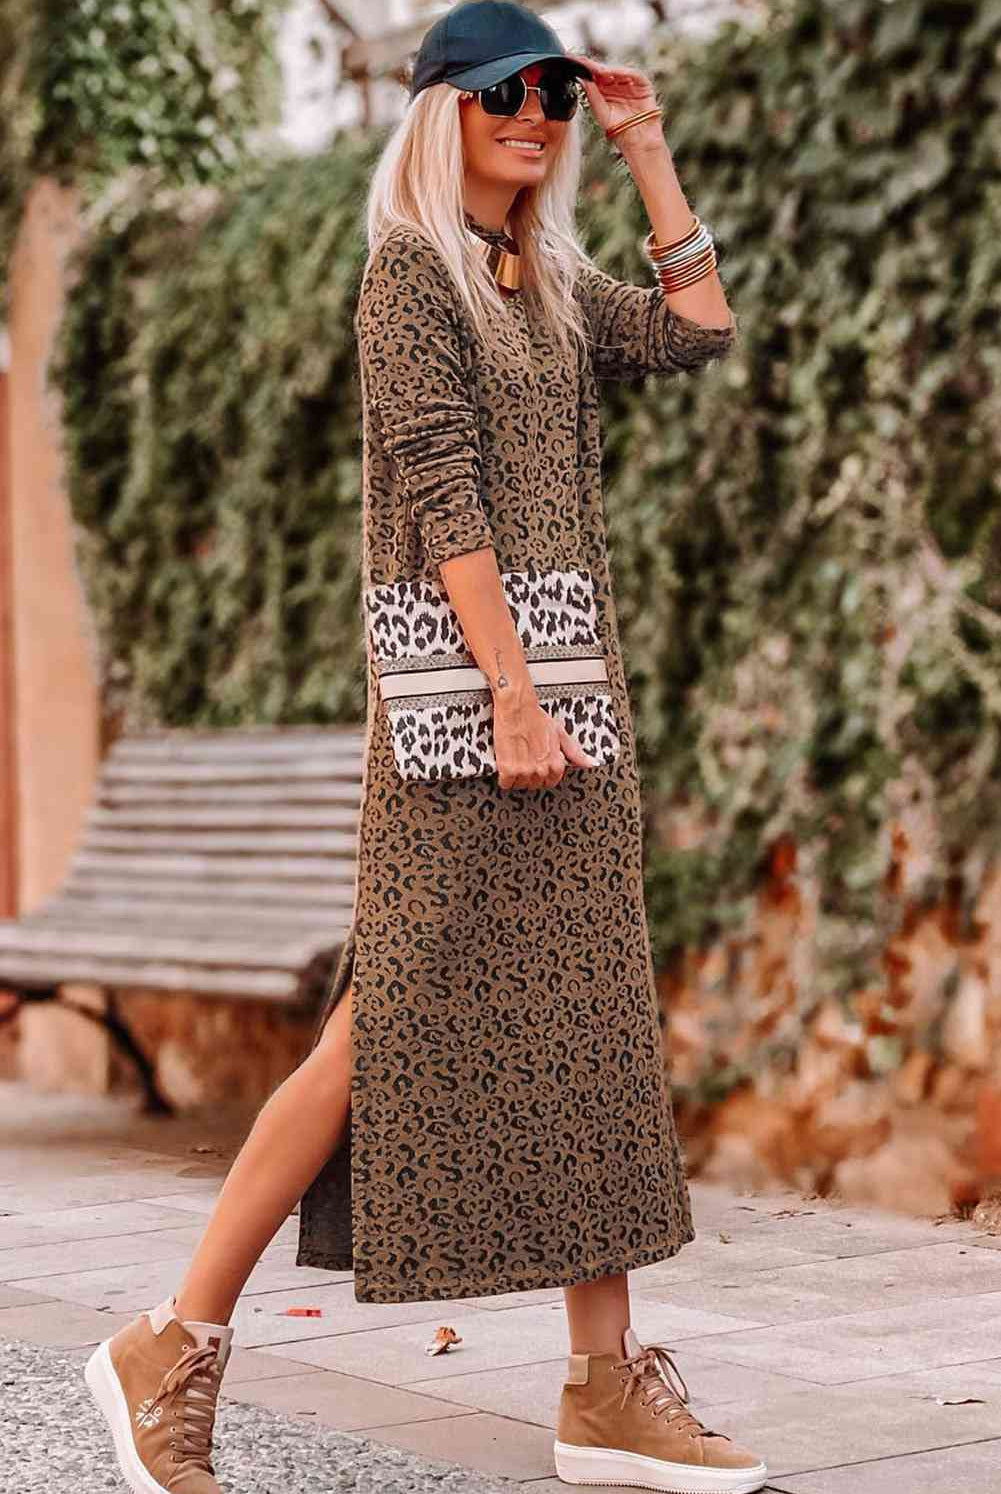 Dim Gray Round Neck Leopard Print Long Sleeve Slit Dress Trends